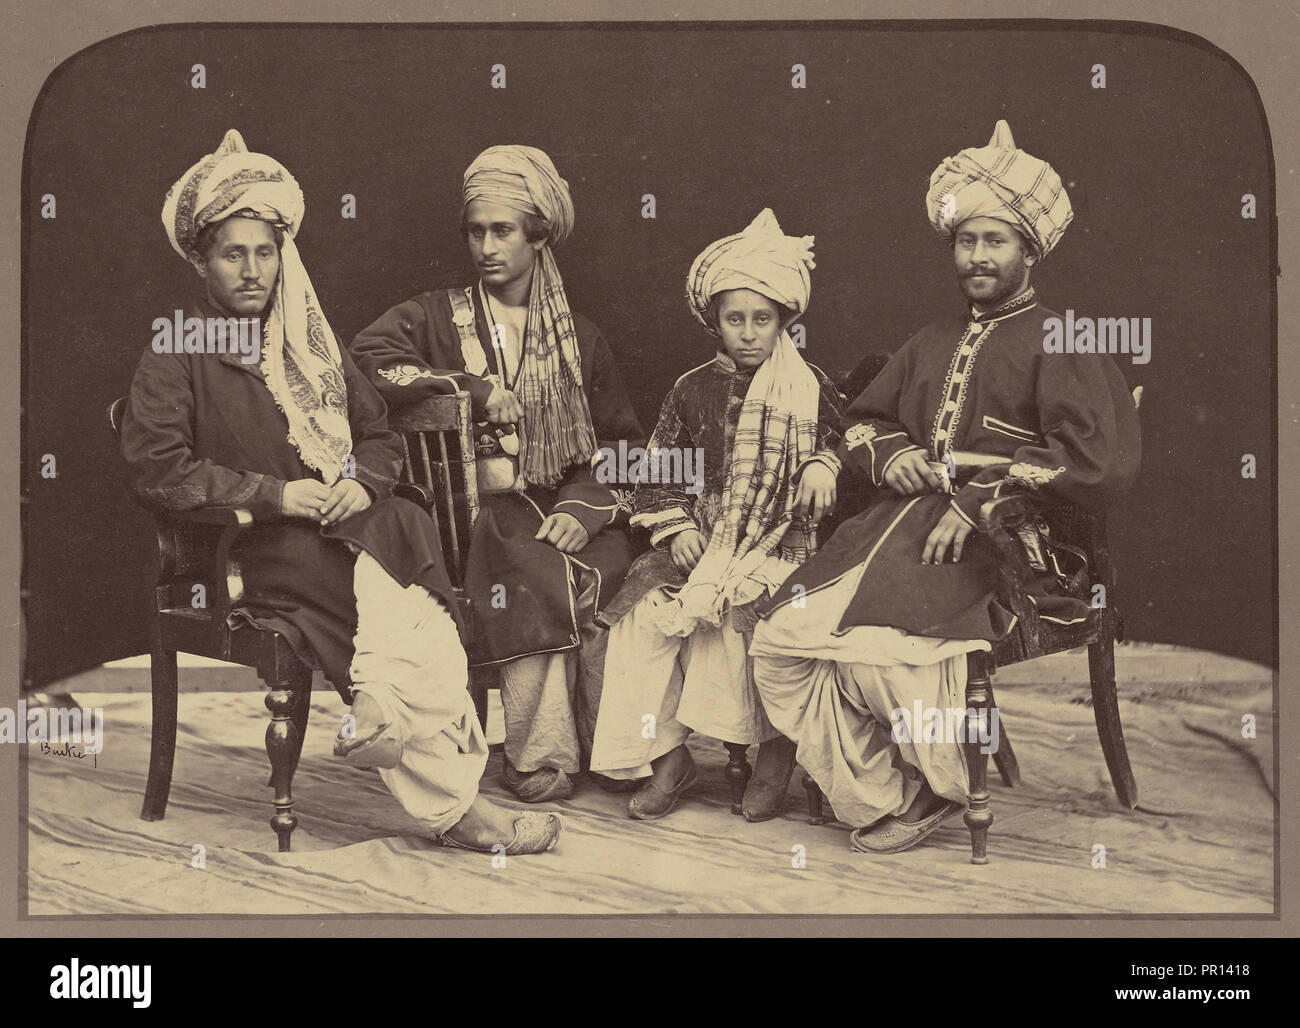 Portrait of men and boy; John Burke, British, active 1860s - 1870s, Afghanistan; 1878 - 1879; Albumen silver print Stock Photo